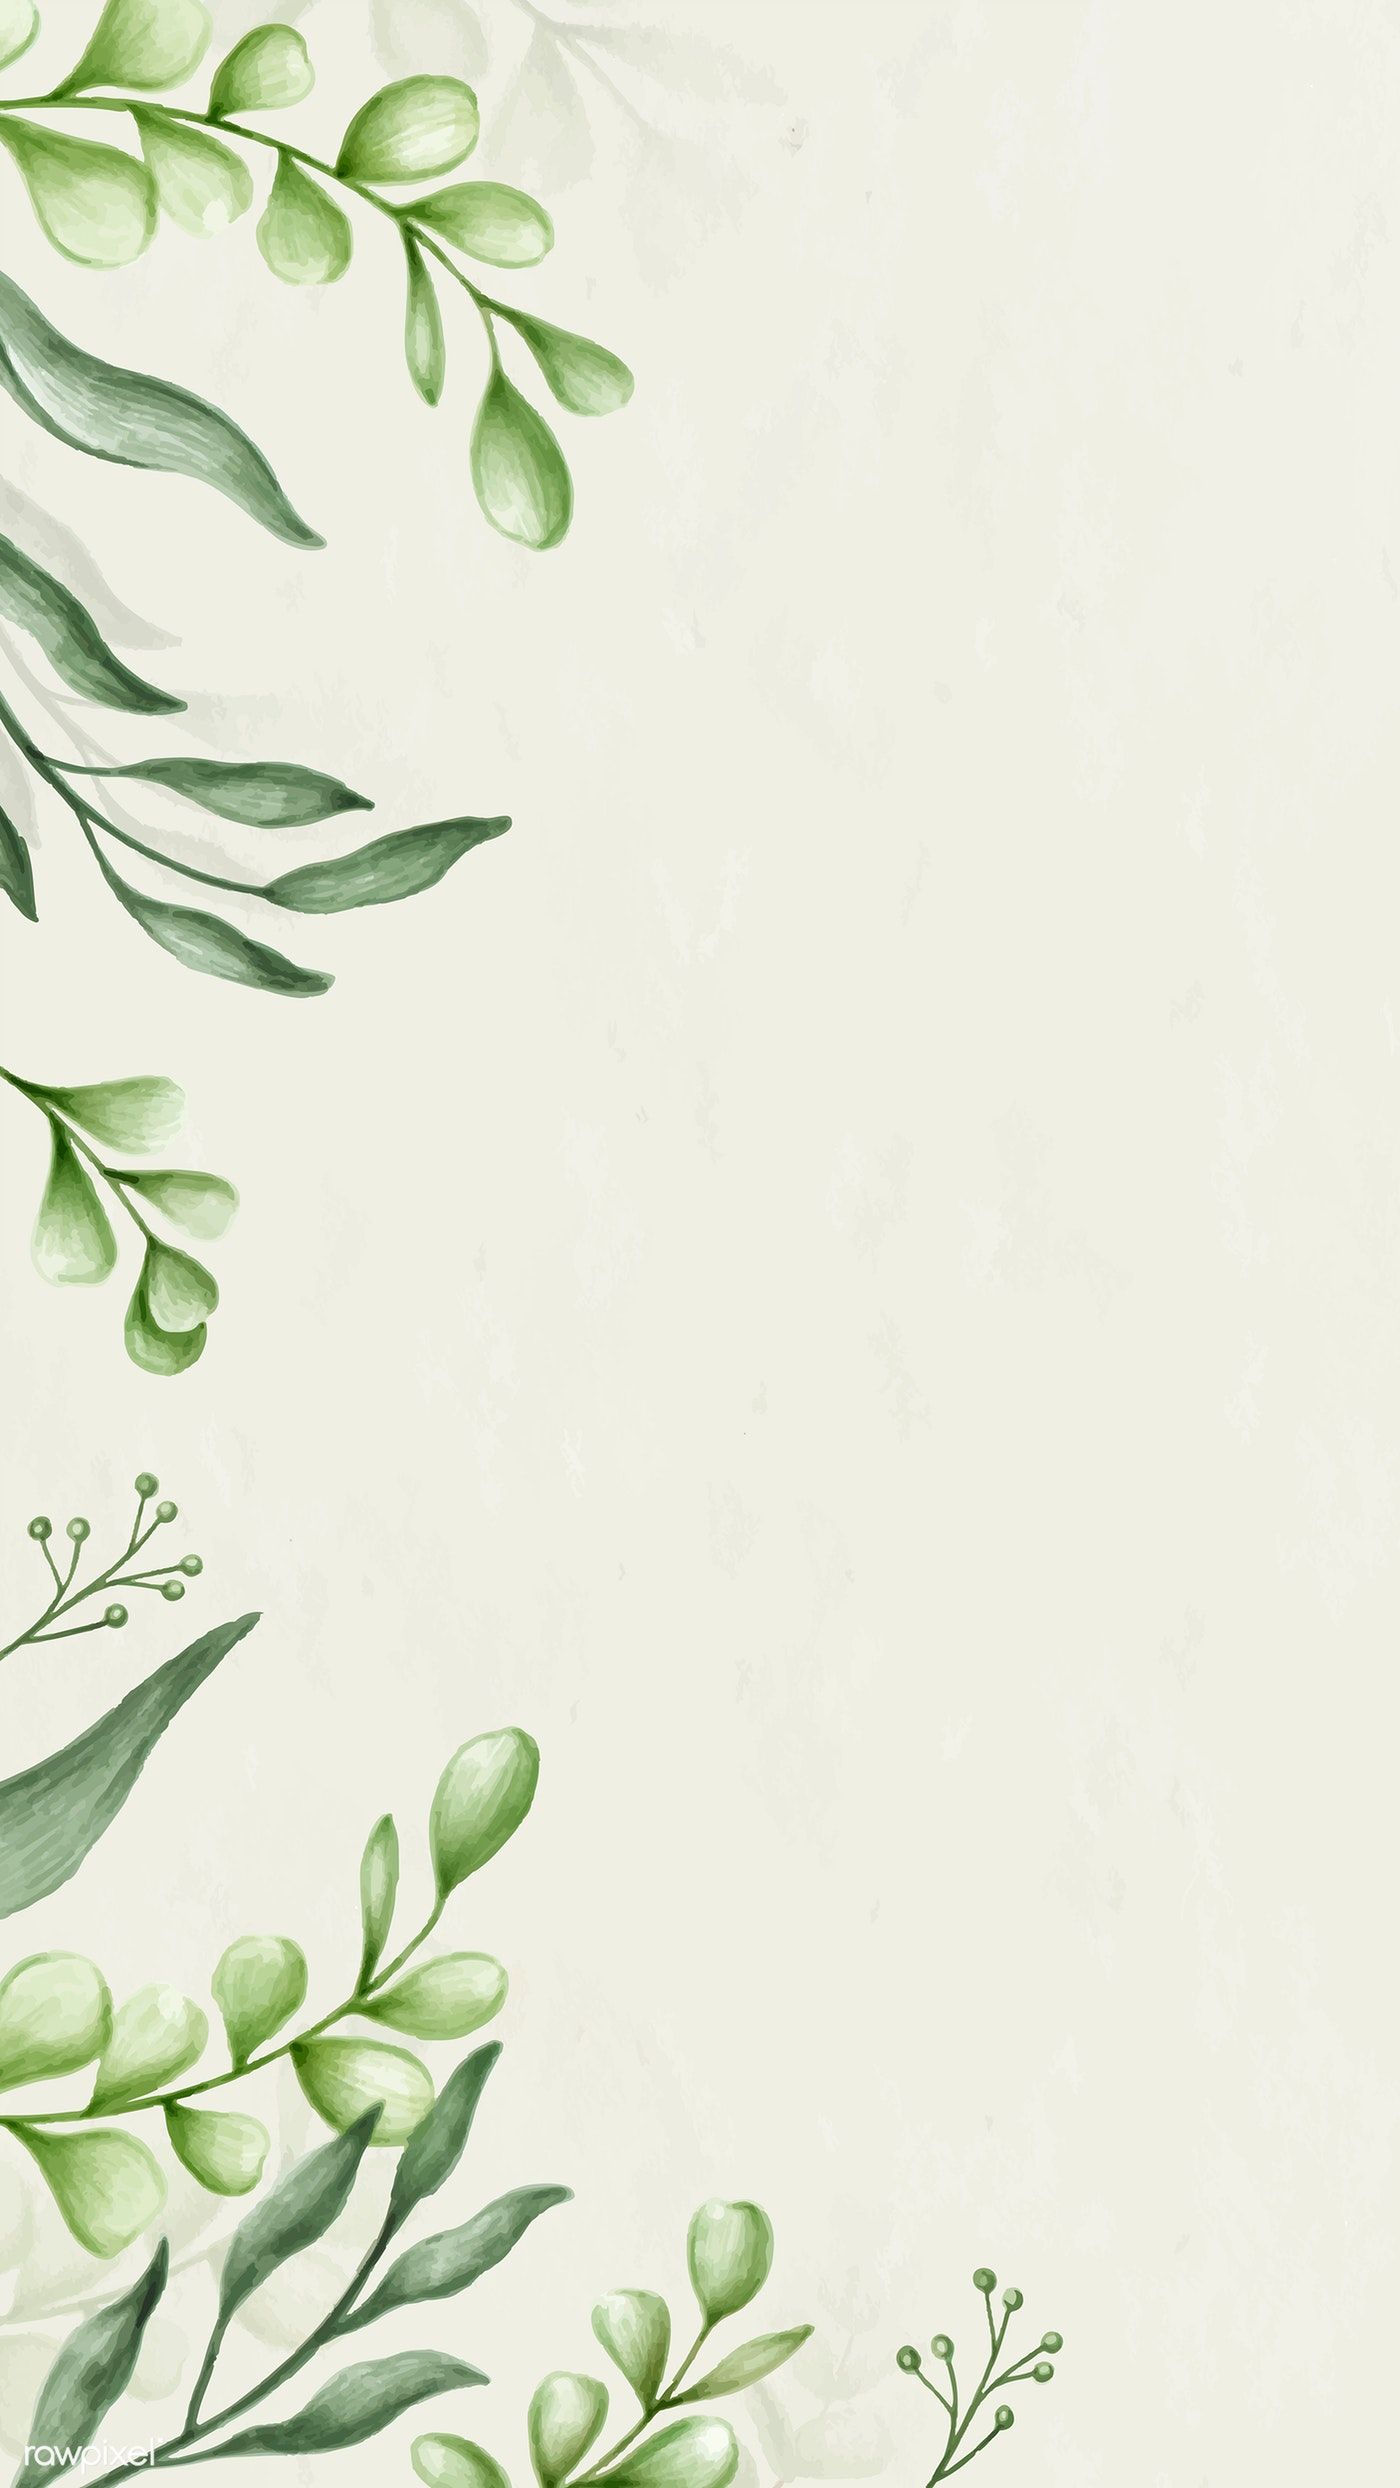 Botanical patterned mobile wallpaper. Royalty free stock vector